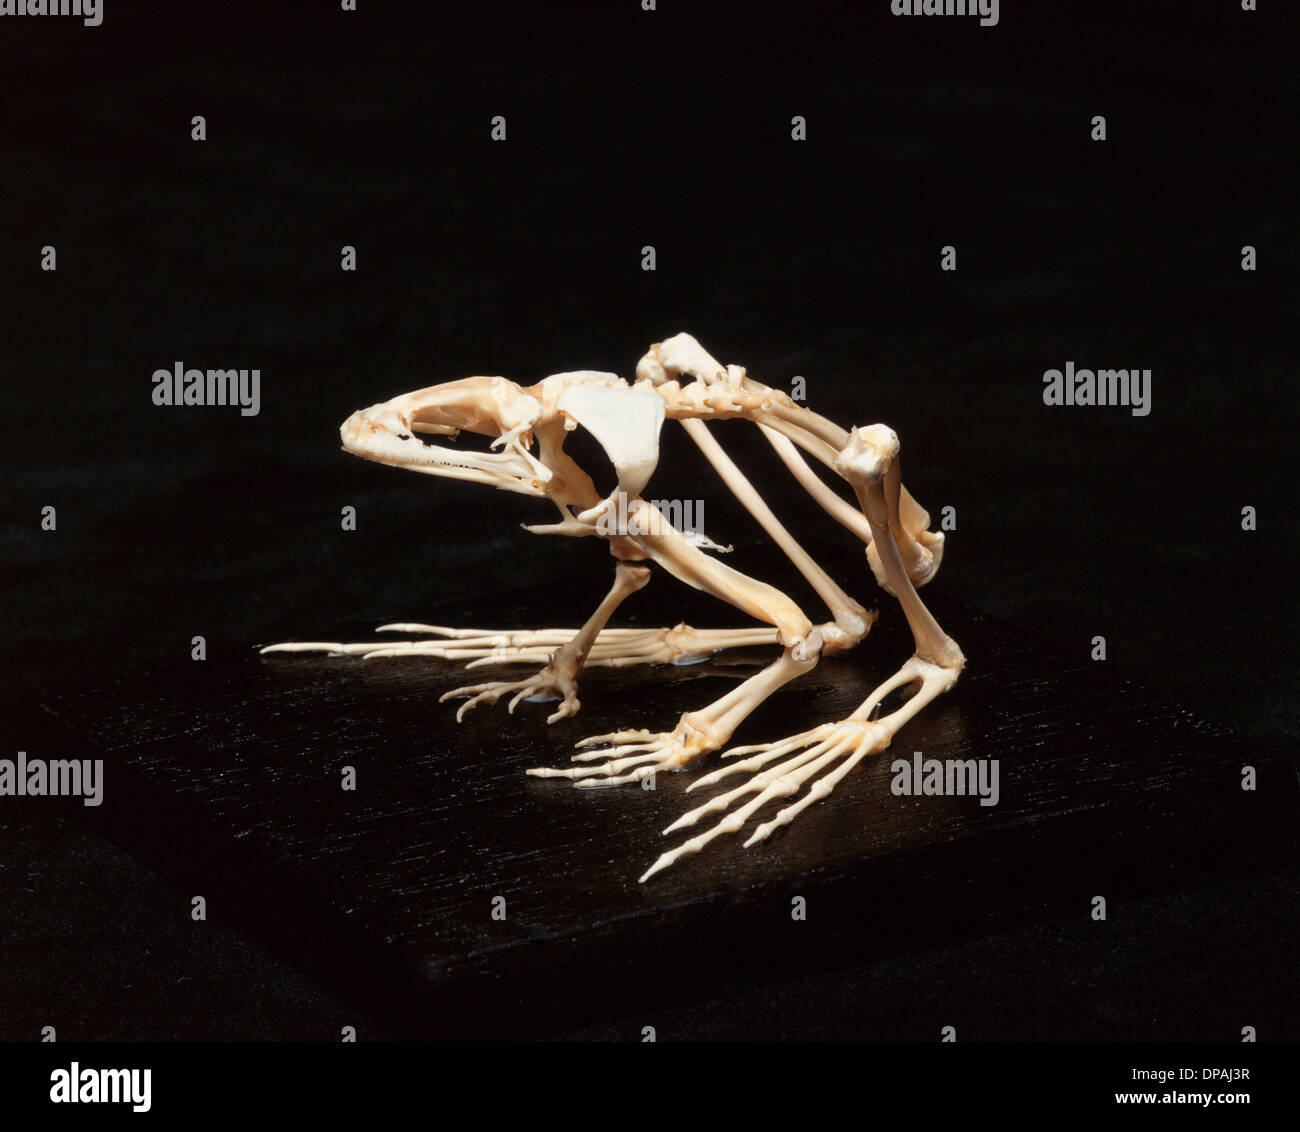 Esqueleto de rana, Foto de estudio Foto de stock